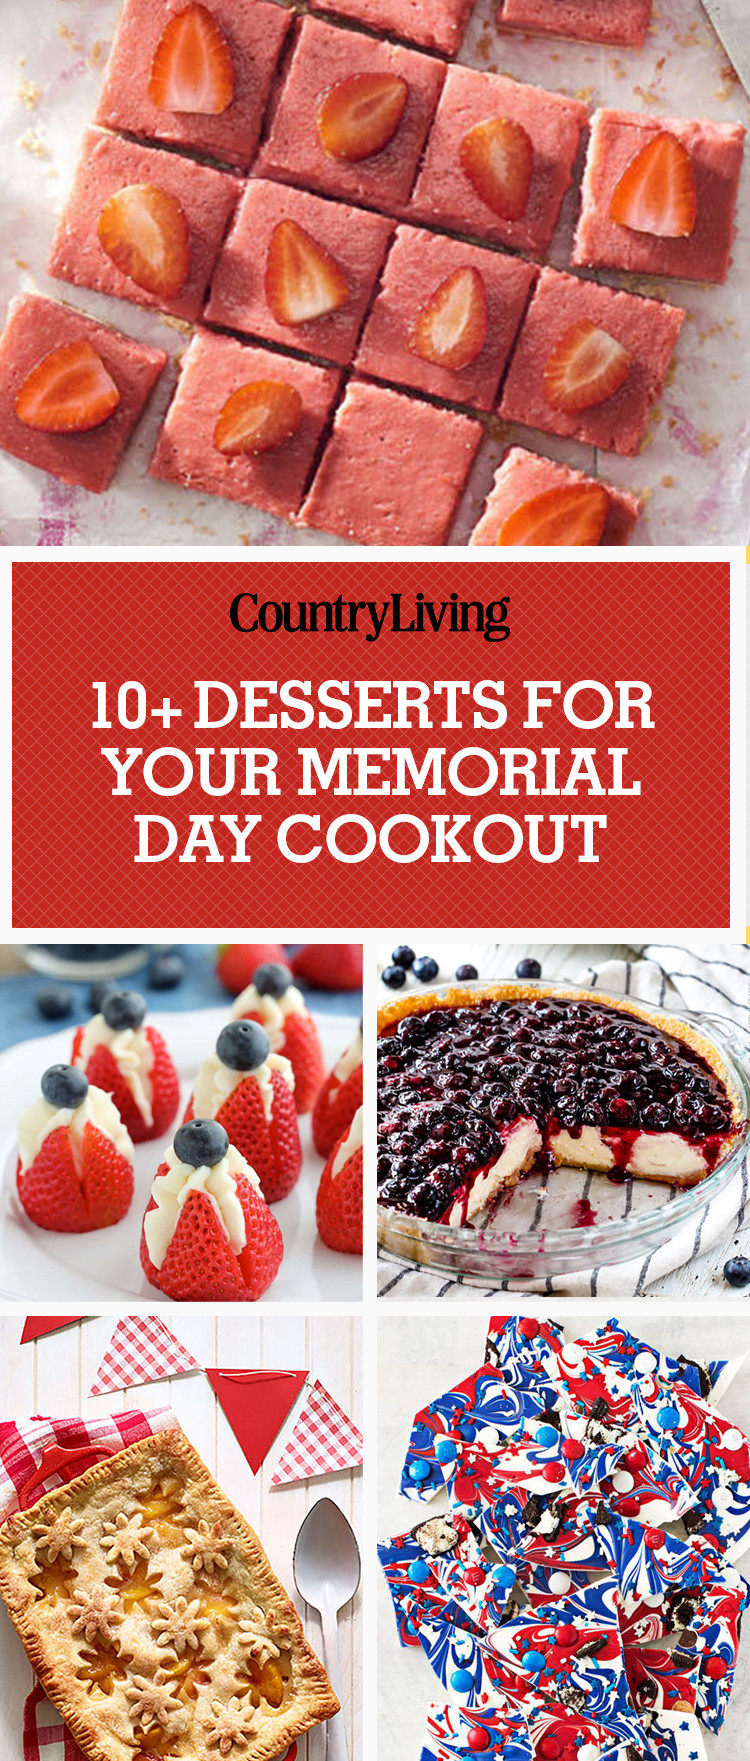 Dessert For Memorial Day
 13 Easy Memorial Day Desserts Best Recipes for Memorial